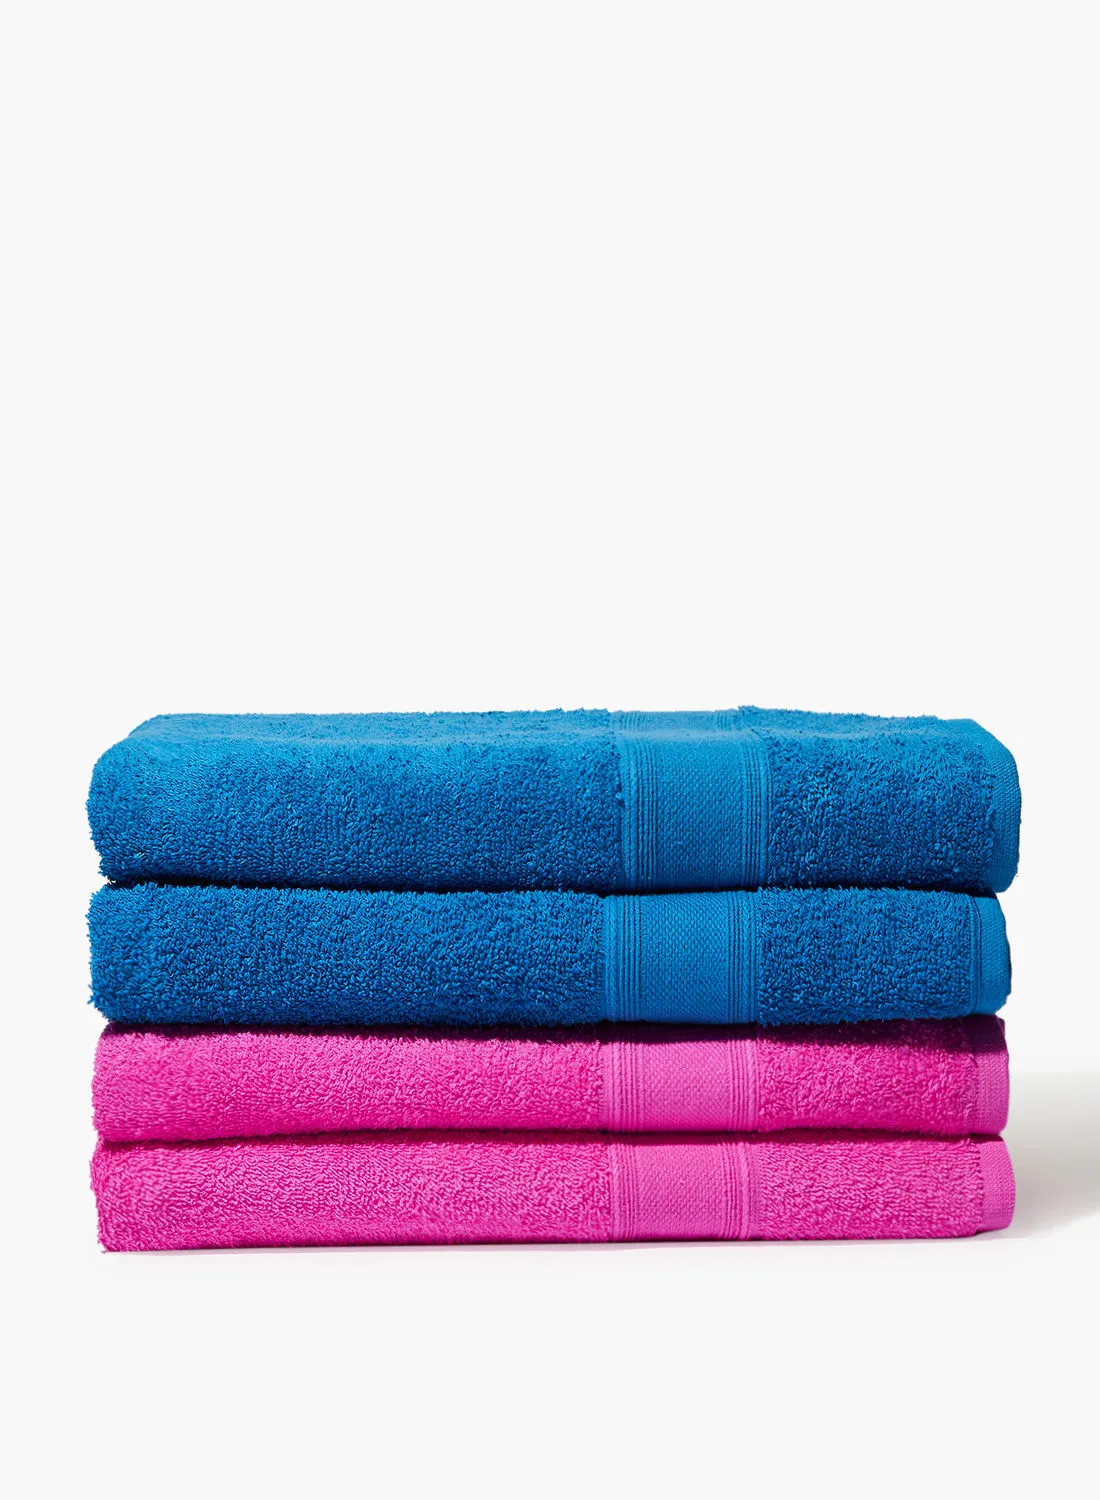 Amal 4 Piece Bathroom Towel Set - 400 GSM 100% Cotton Terry - 4 Bath Towel - Blue Color -Quick Dry - Super Absorbent